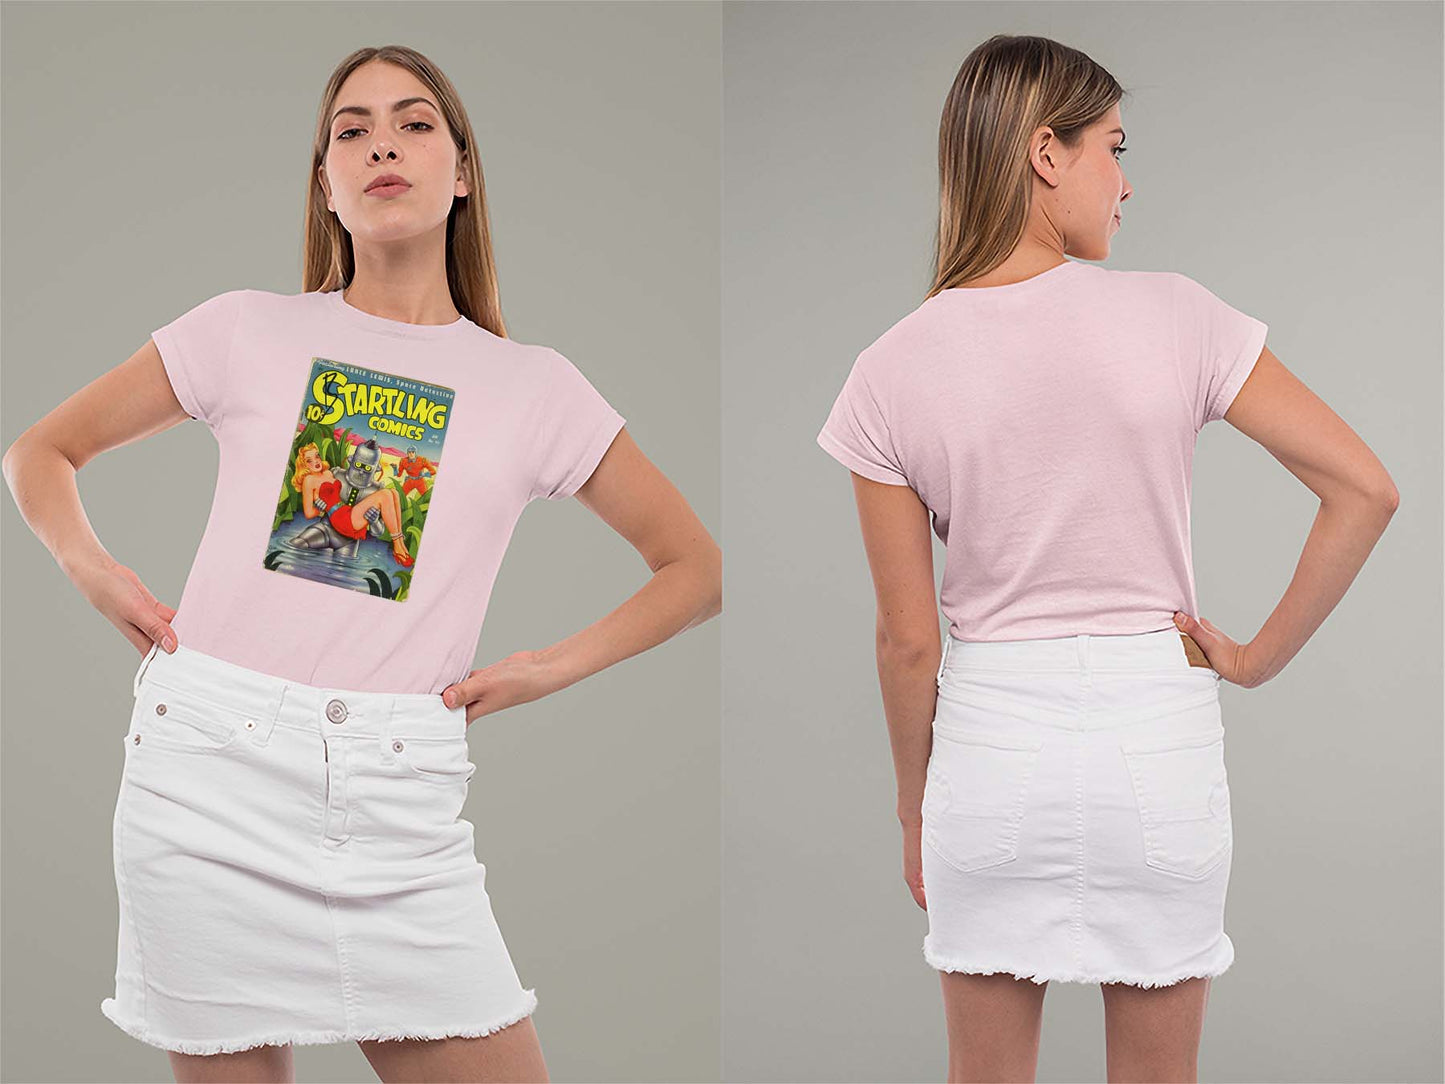 Startling Comics No39 Ladies Crew (Round) Neck Shirt Small Light Pink